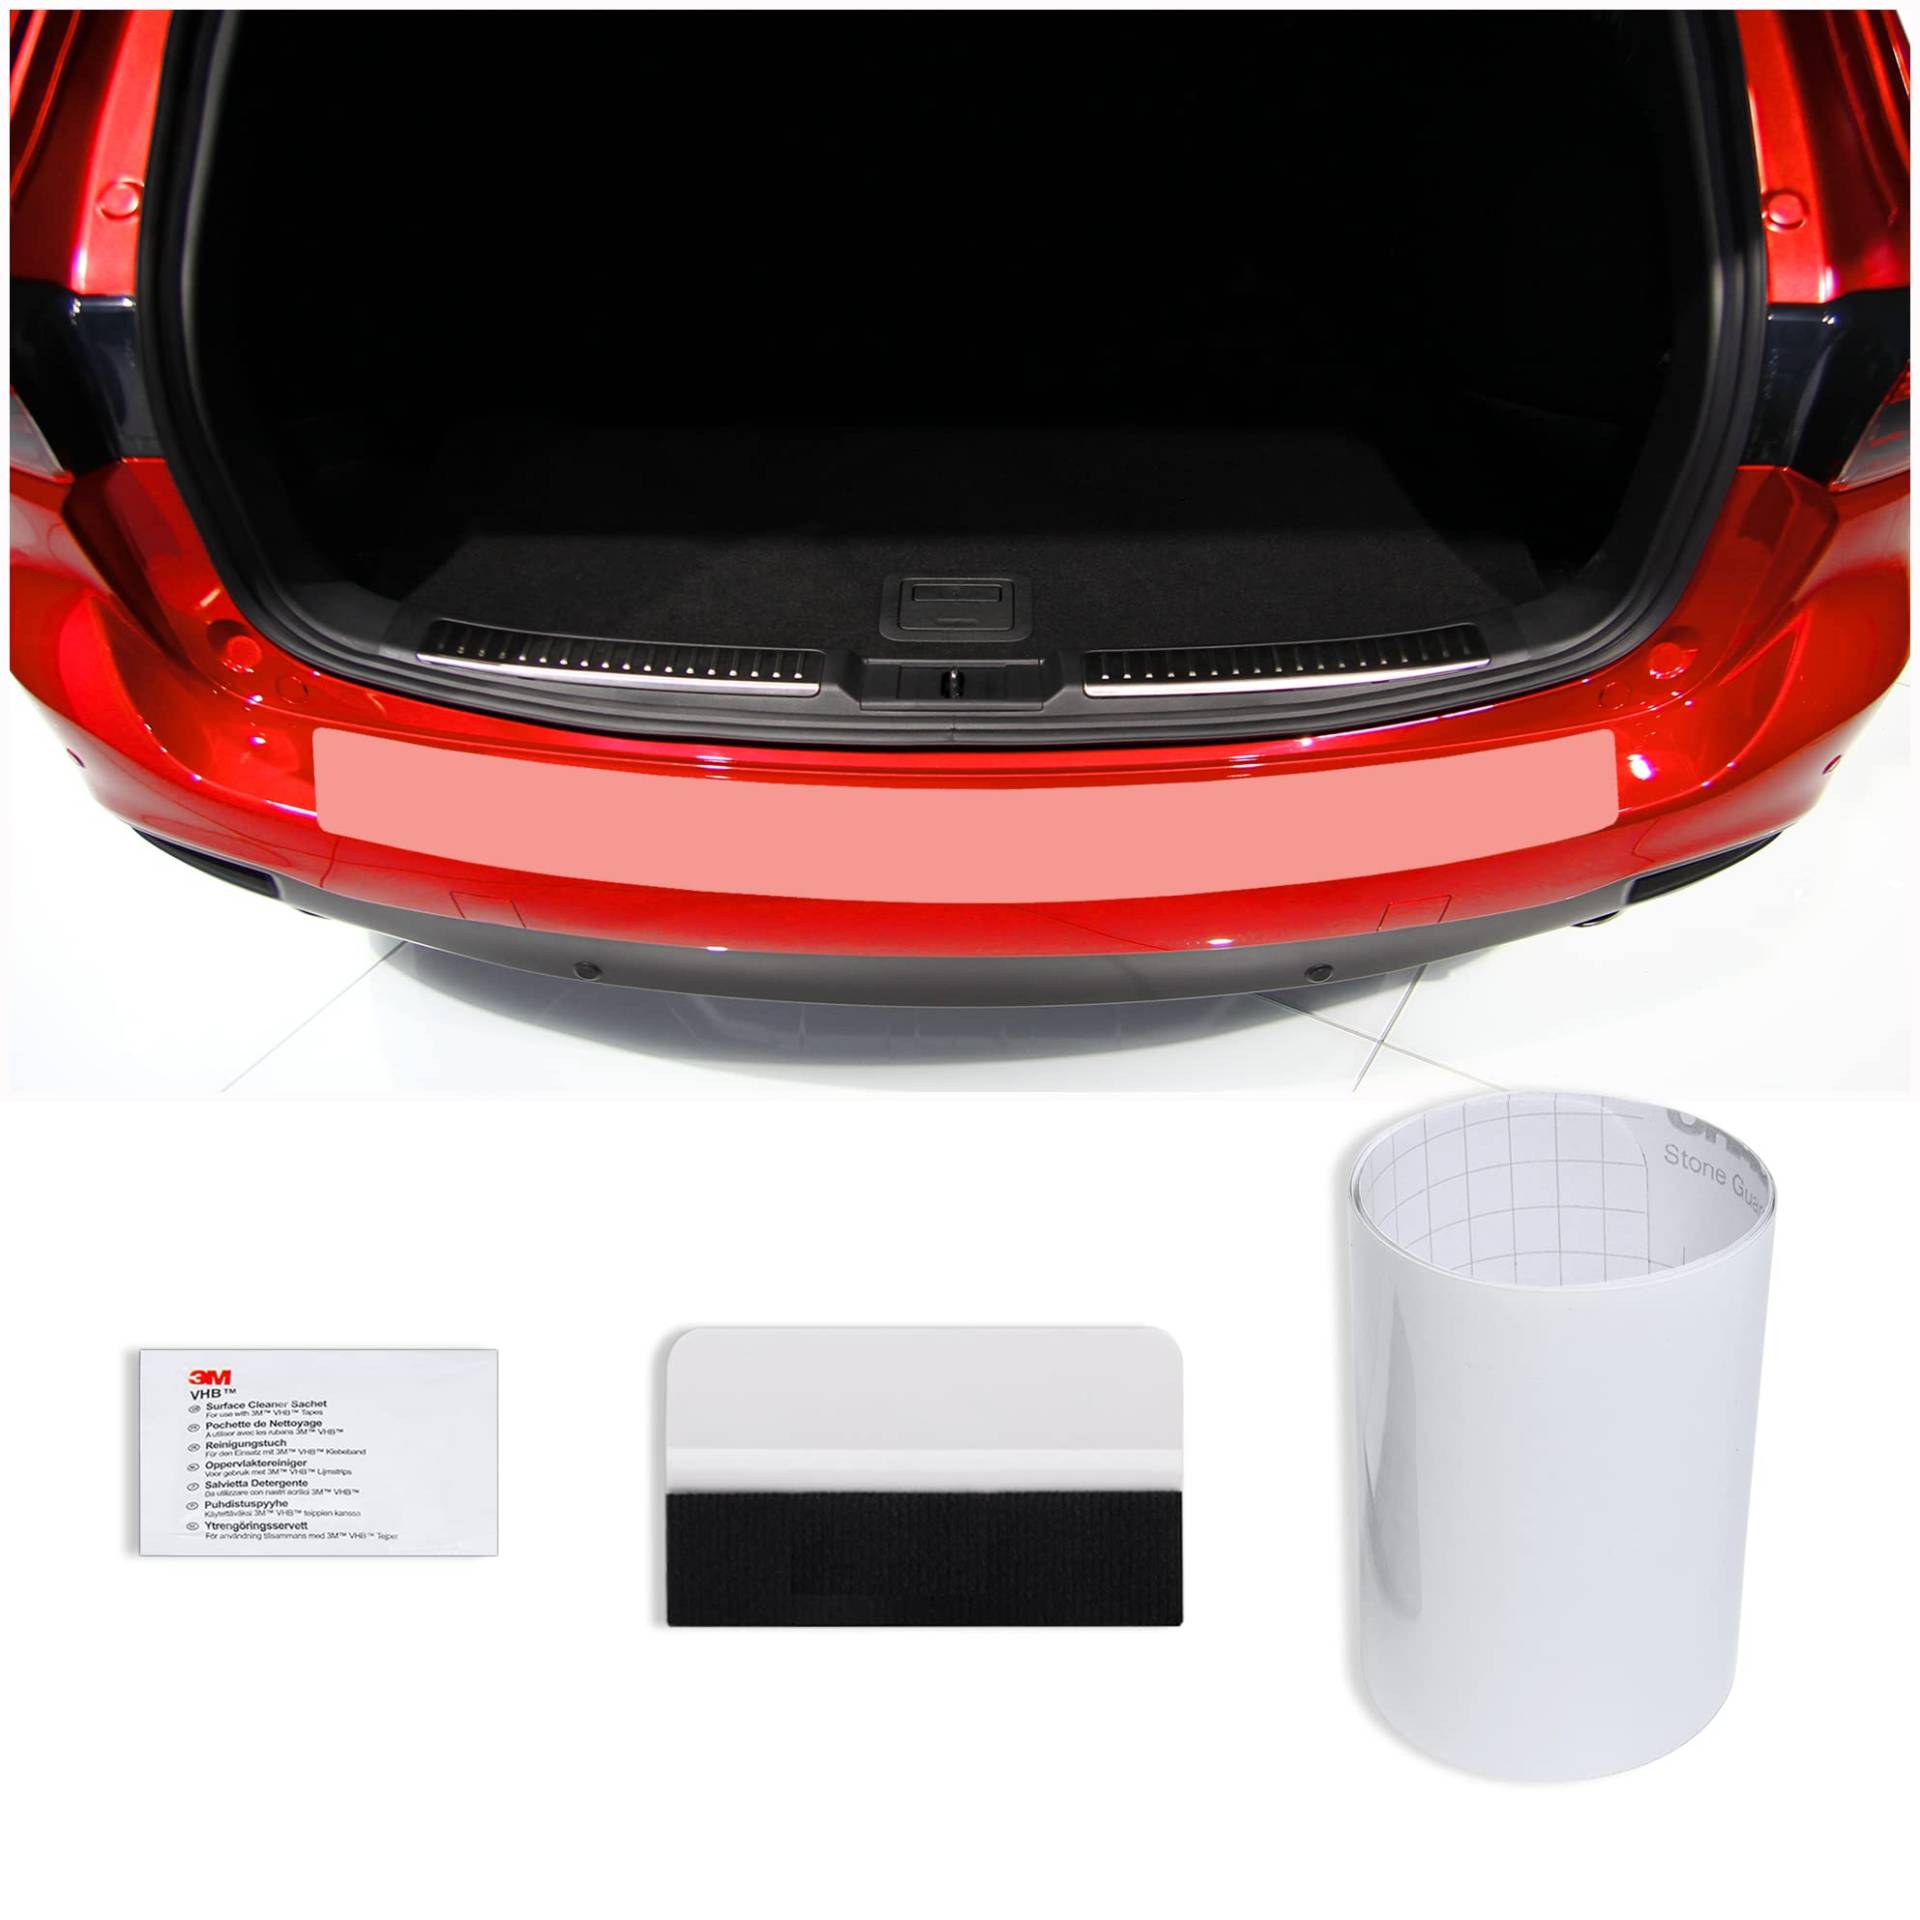 teileplus24 OL135 Ladekantenschutz Folie kompatibel mit Toyota Corolla E210 Touring 2019- Profi-Rakel, Farbe:Transparent von teileplus24